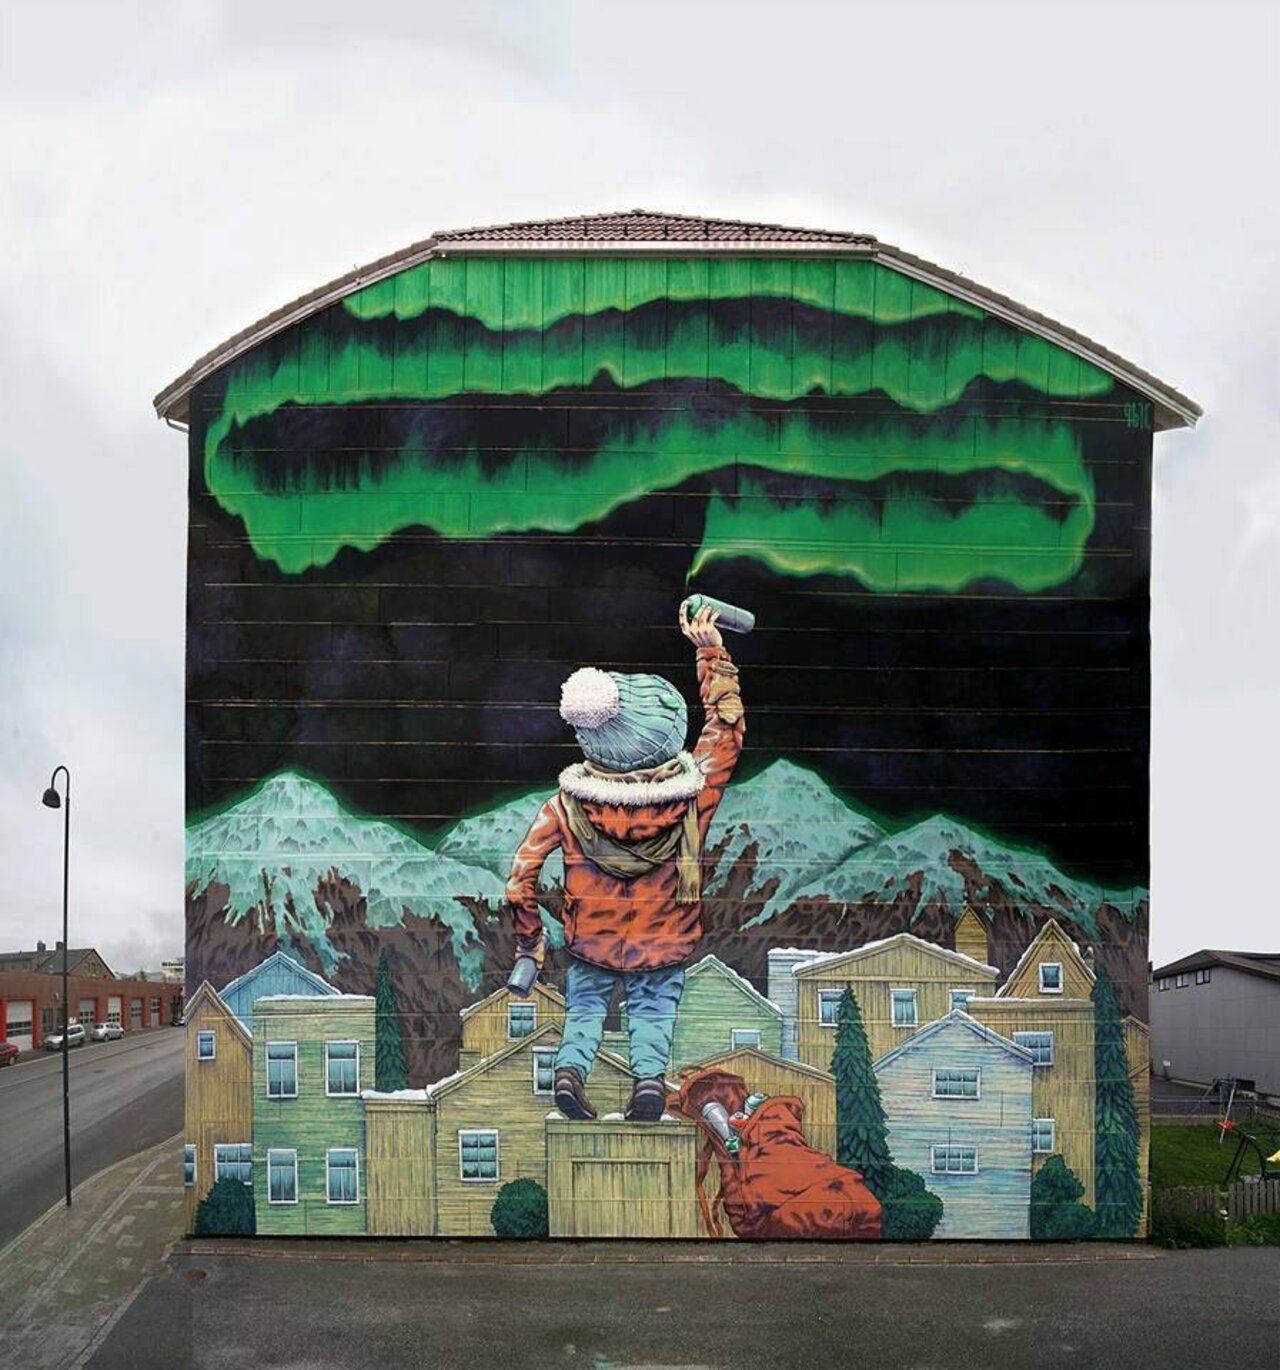 RT GoogleStreetArt: Street Art by Rustam QBic found in Bodo in Norway  #art #mural #graffiti #streetart https://t.co/knRCNm5iPz